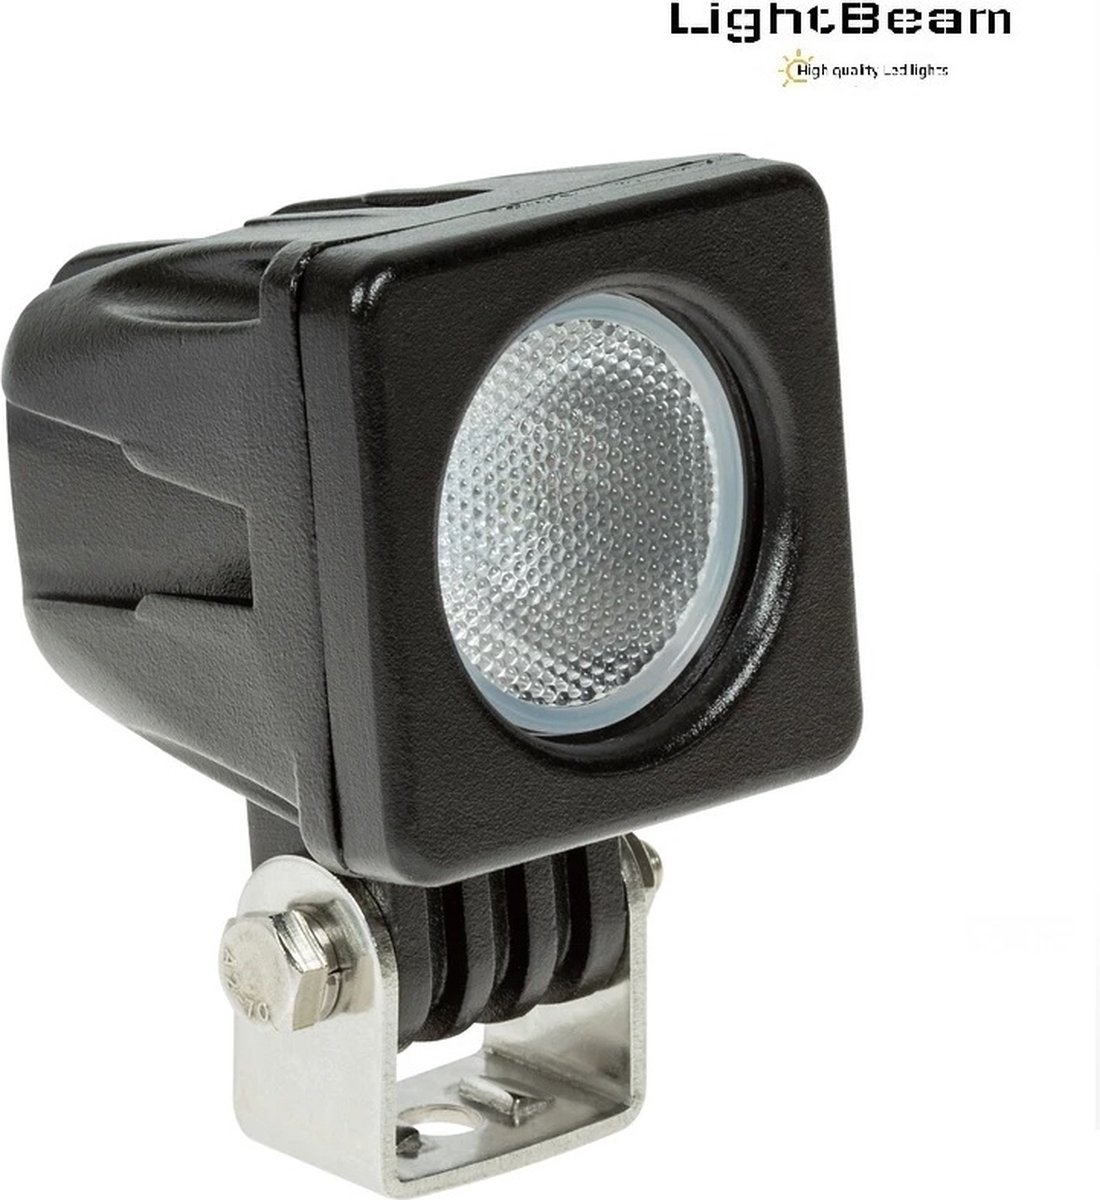 LightBeam 10 watt LED breedstraler / werklamp R10 gecertificeerd